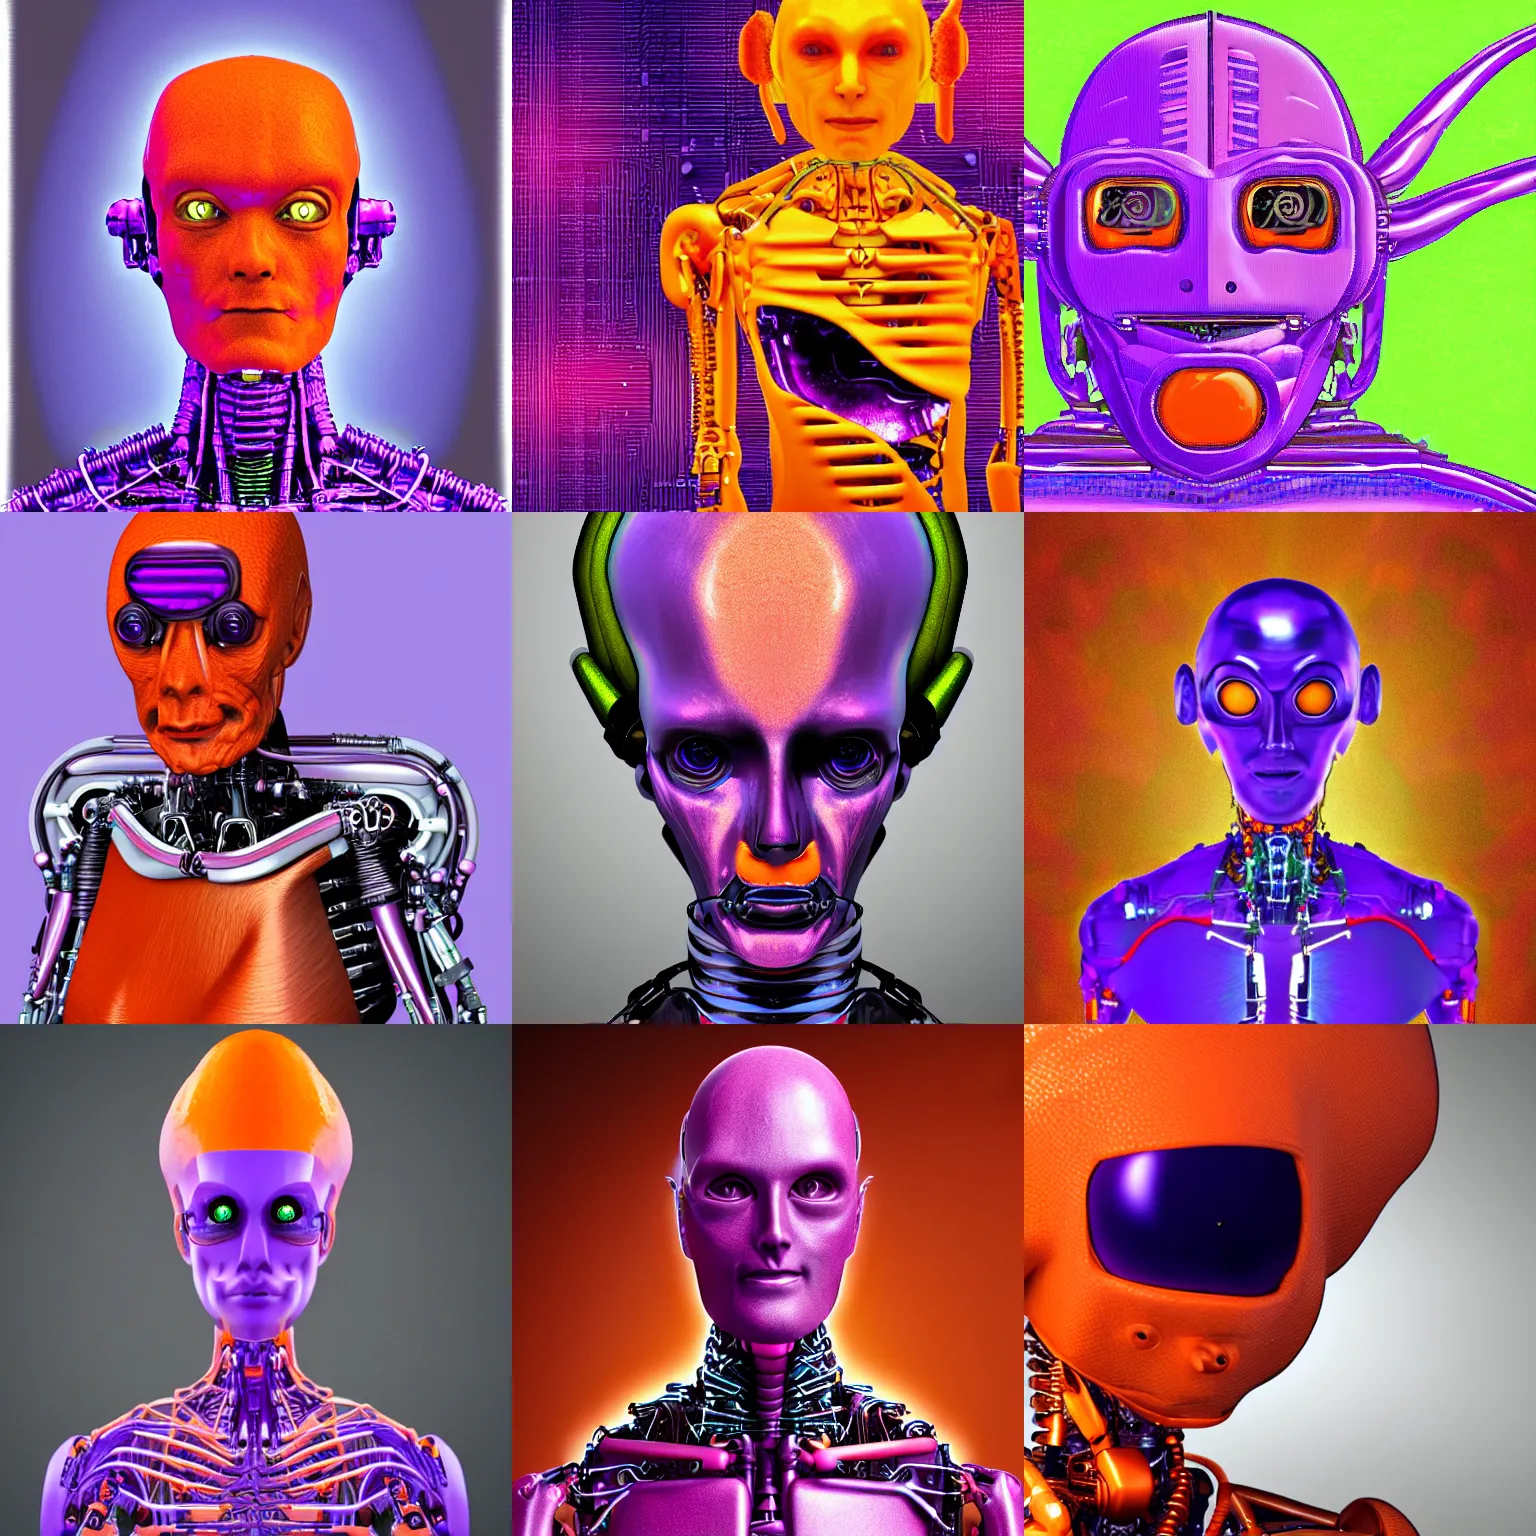 Prompt: Portrait photo of an orange and purple alien, cybernetic modifications